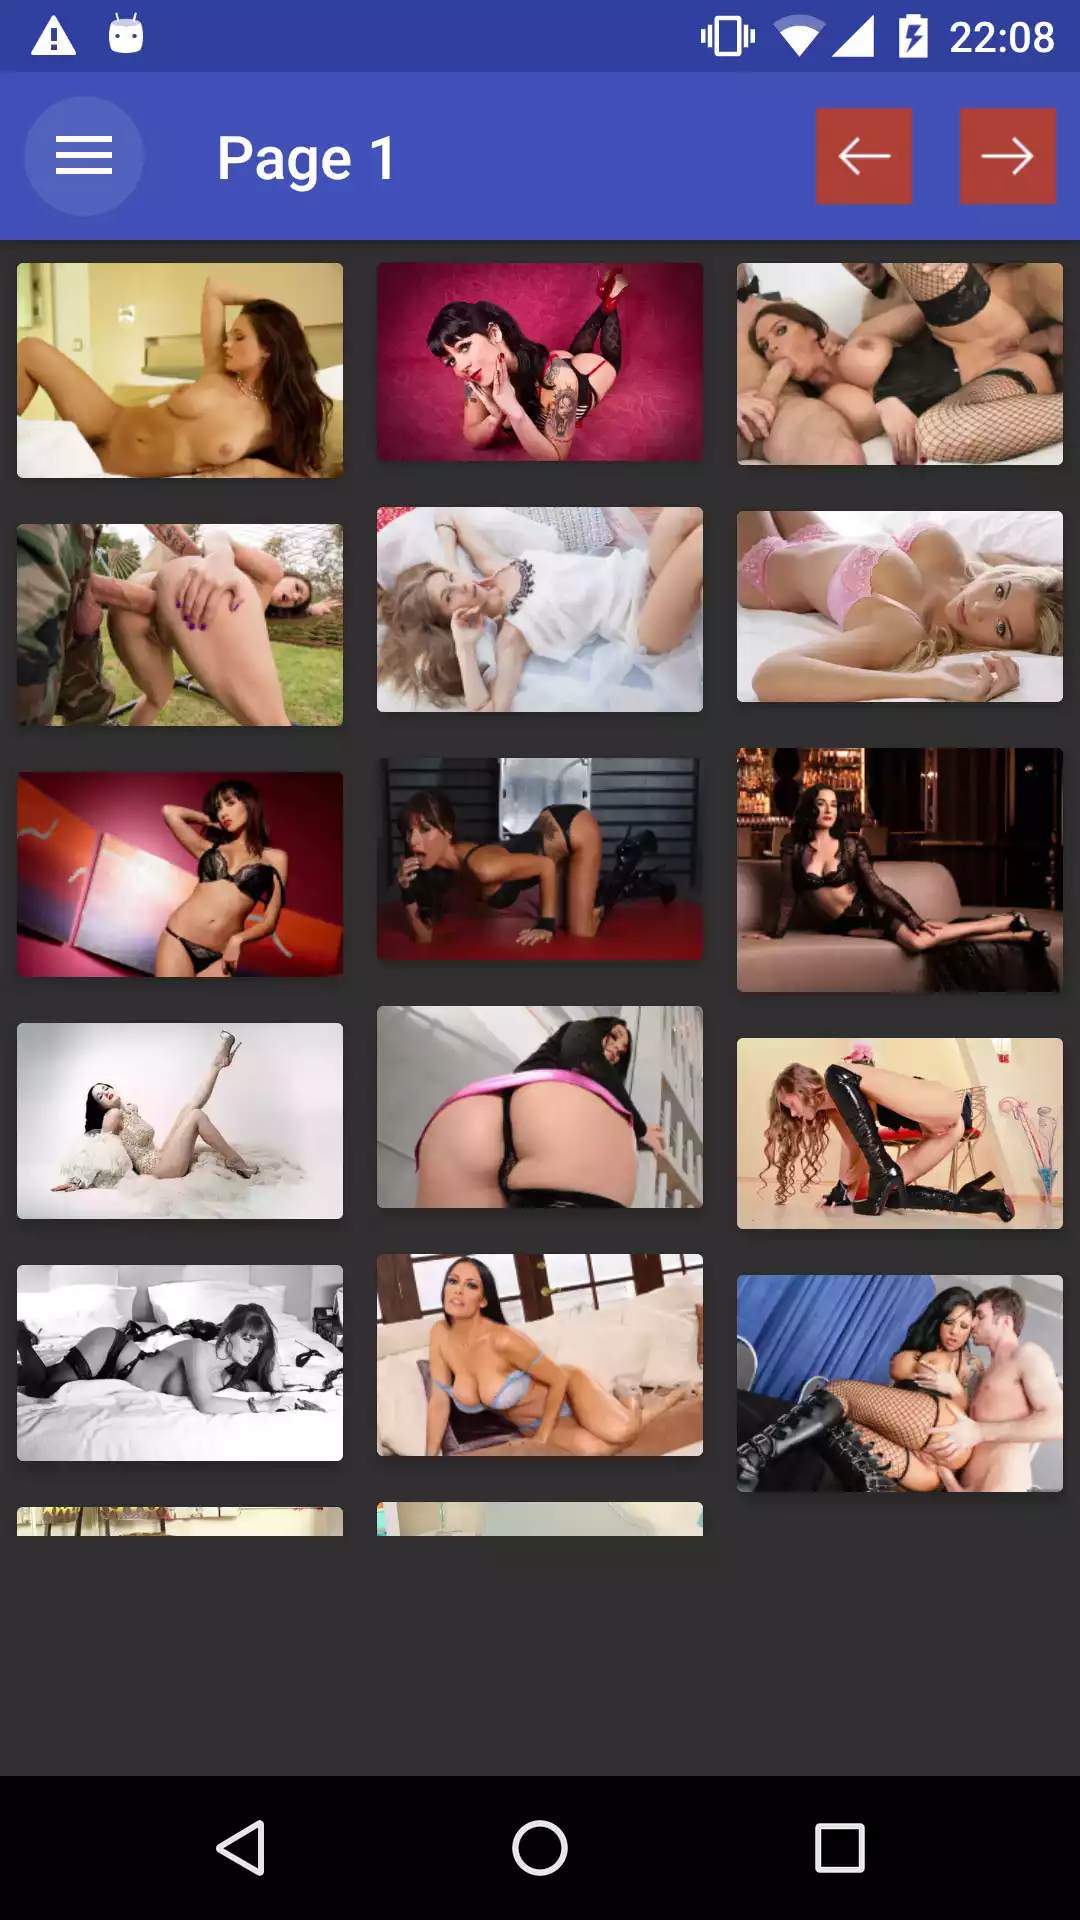 Pornstar Wallpapers 2 picture,hot,pics,pornstar,gallery,wallpaper,henti,download,wallpapers,ics,sexy,hentia,apk,upskirt,hentie,sexyteengalleries,app,photos,porn,hentai,pic,free